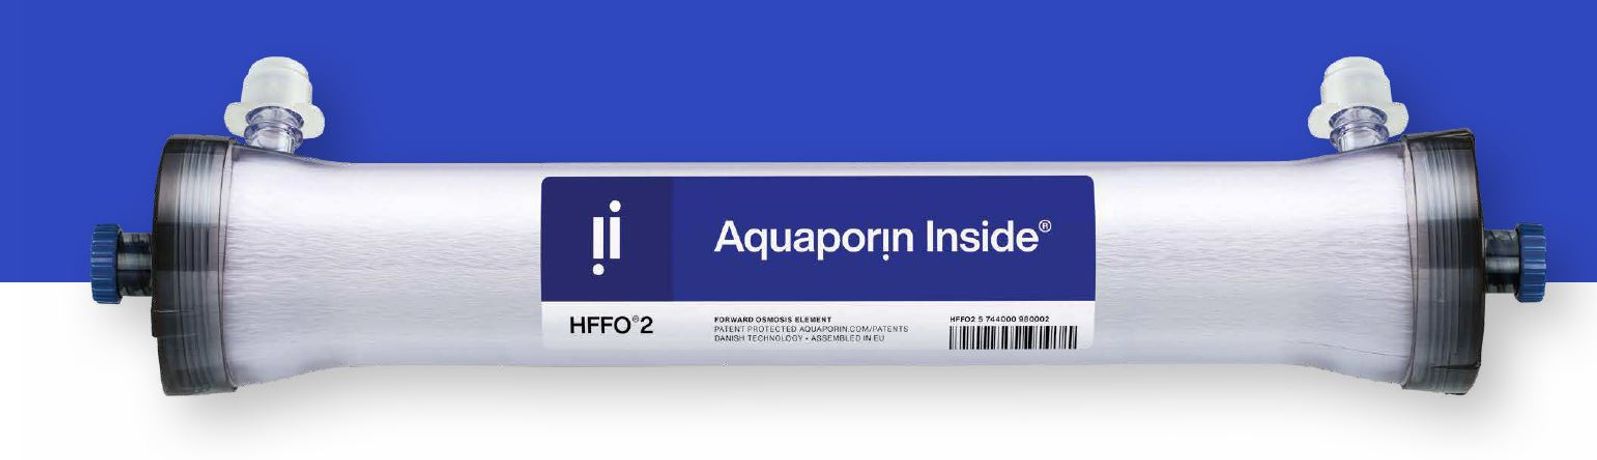 Aquaporin Inside - Model HFFO2 - Hollow Fiber Forward Osmosis Module